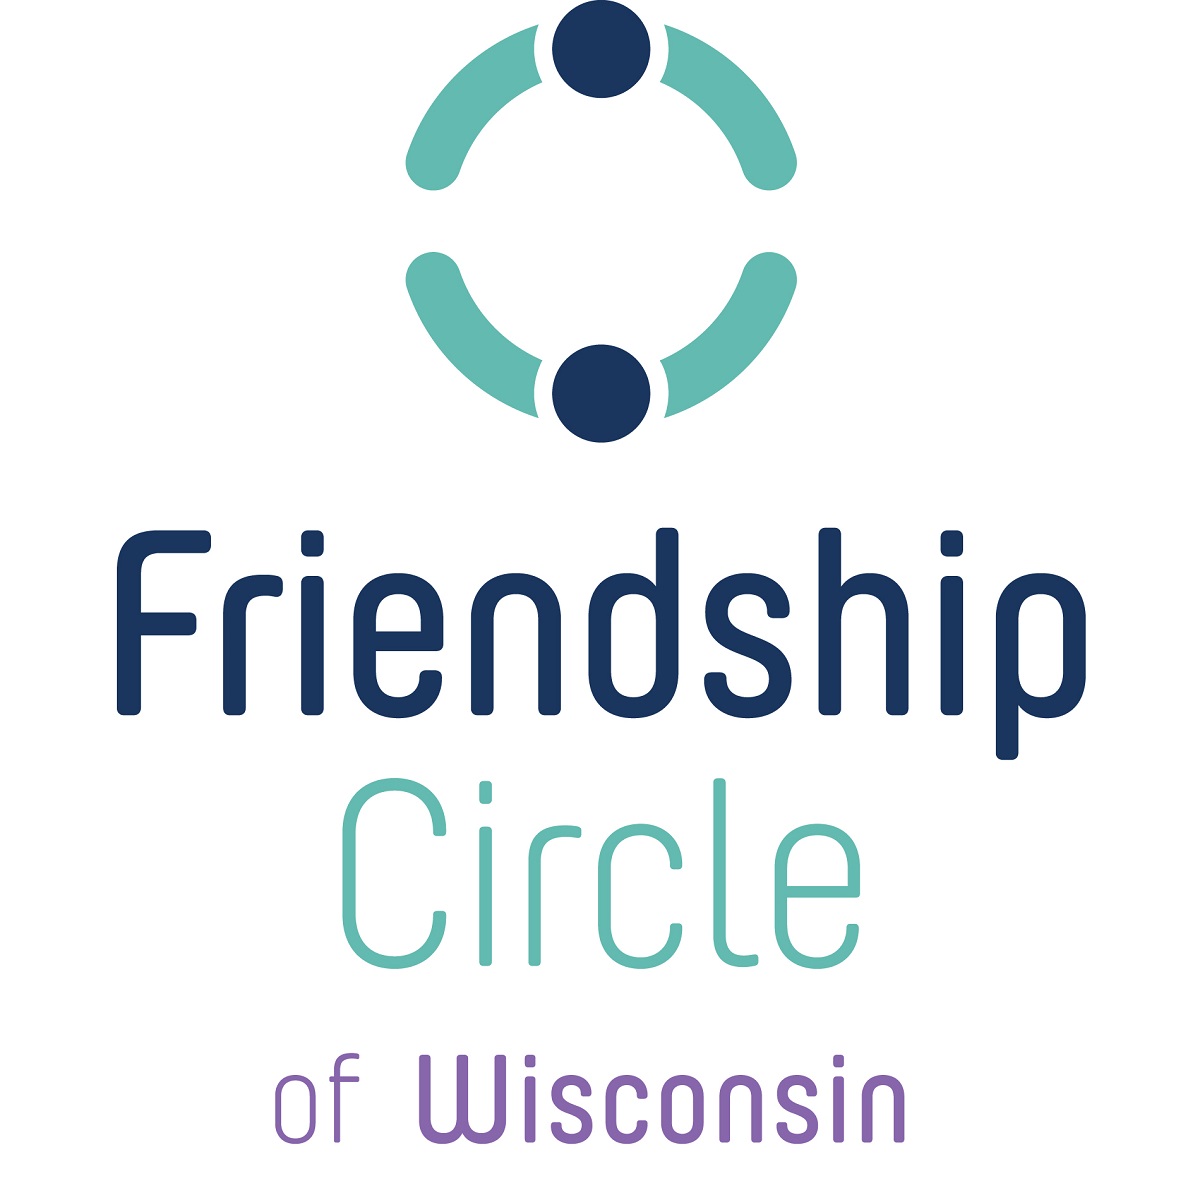 Friendship Circle of Wisconsin job - Fox Point, WI